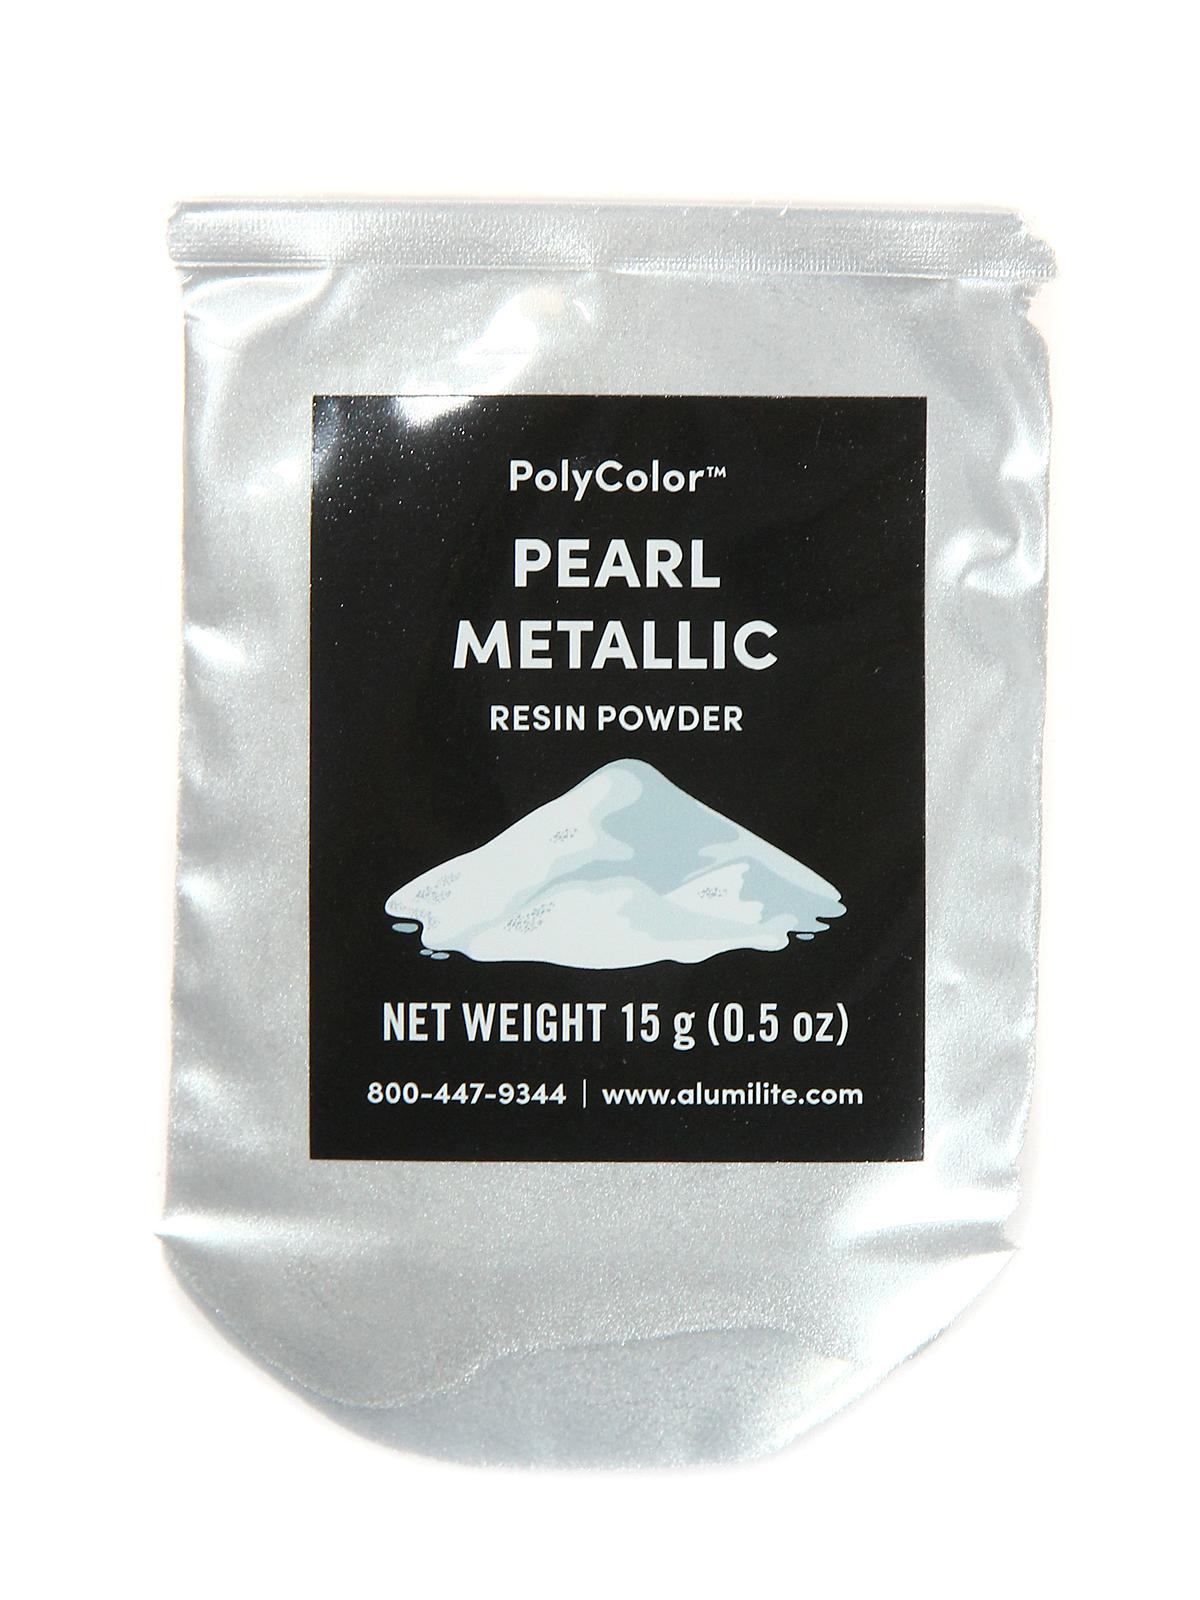 PolyColor Resin Powder Pearl Metallic Bag 15 G (0.5 Oz.)